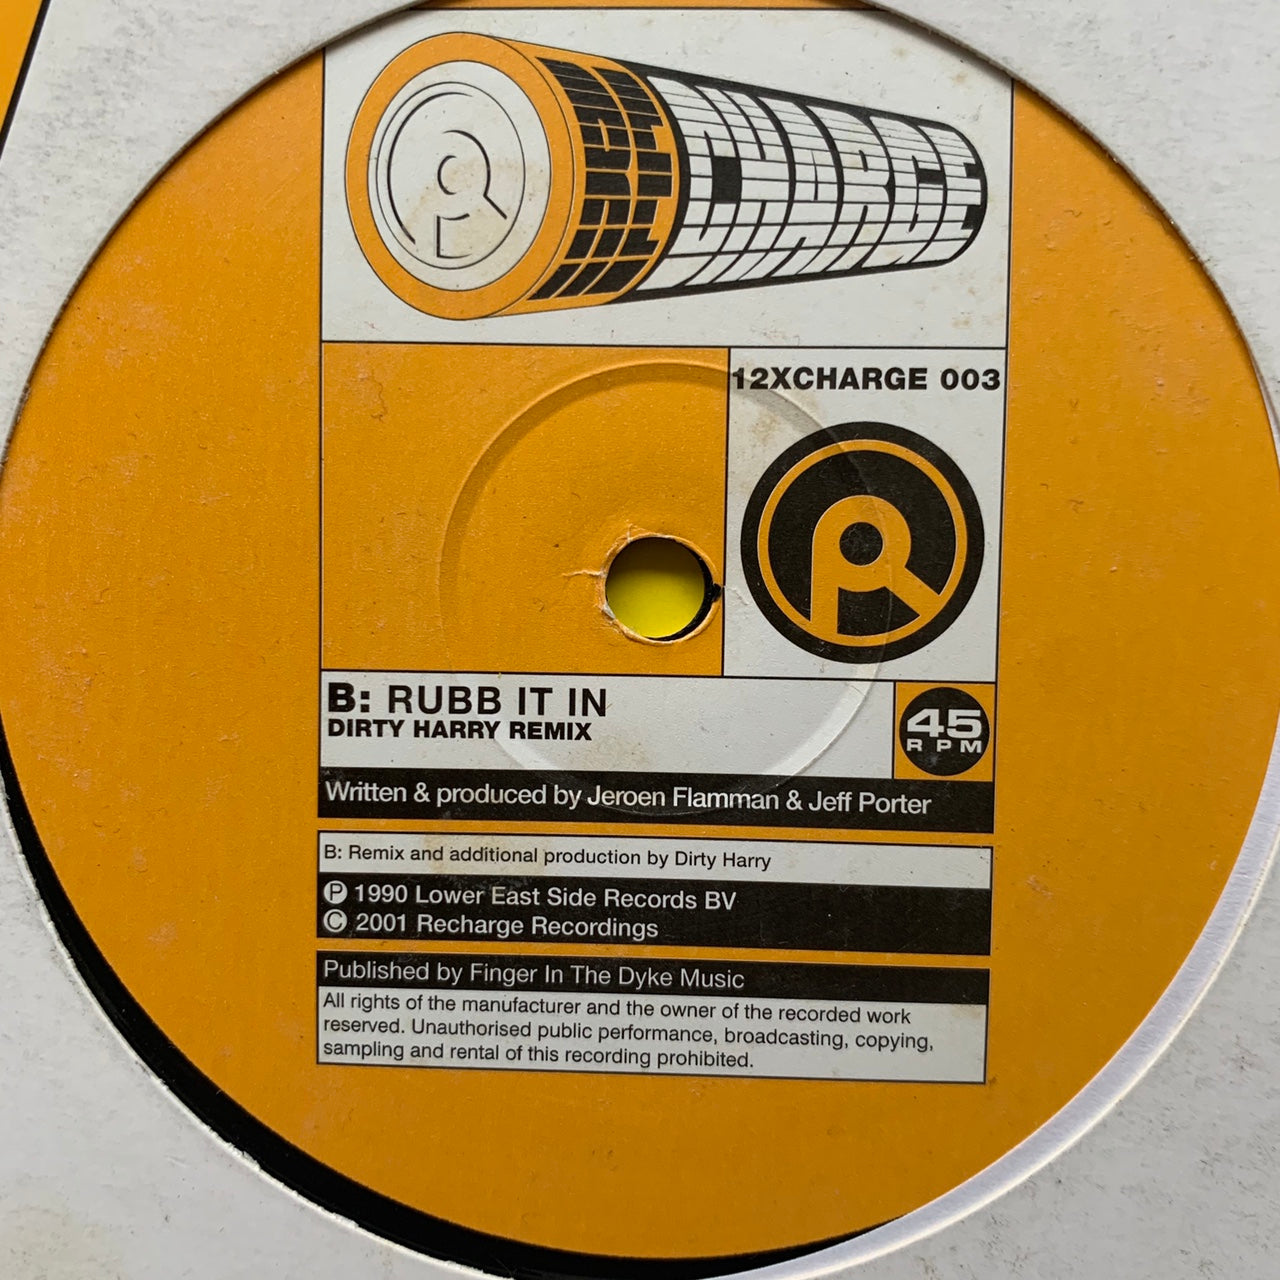 Fierce Ruling Diva “Rubb It In” 2 version 12inch Vinyl